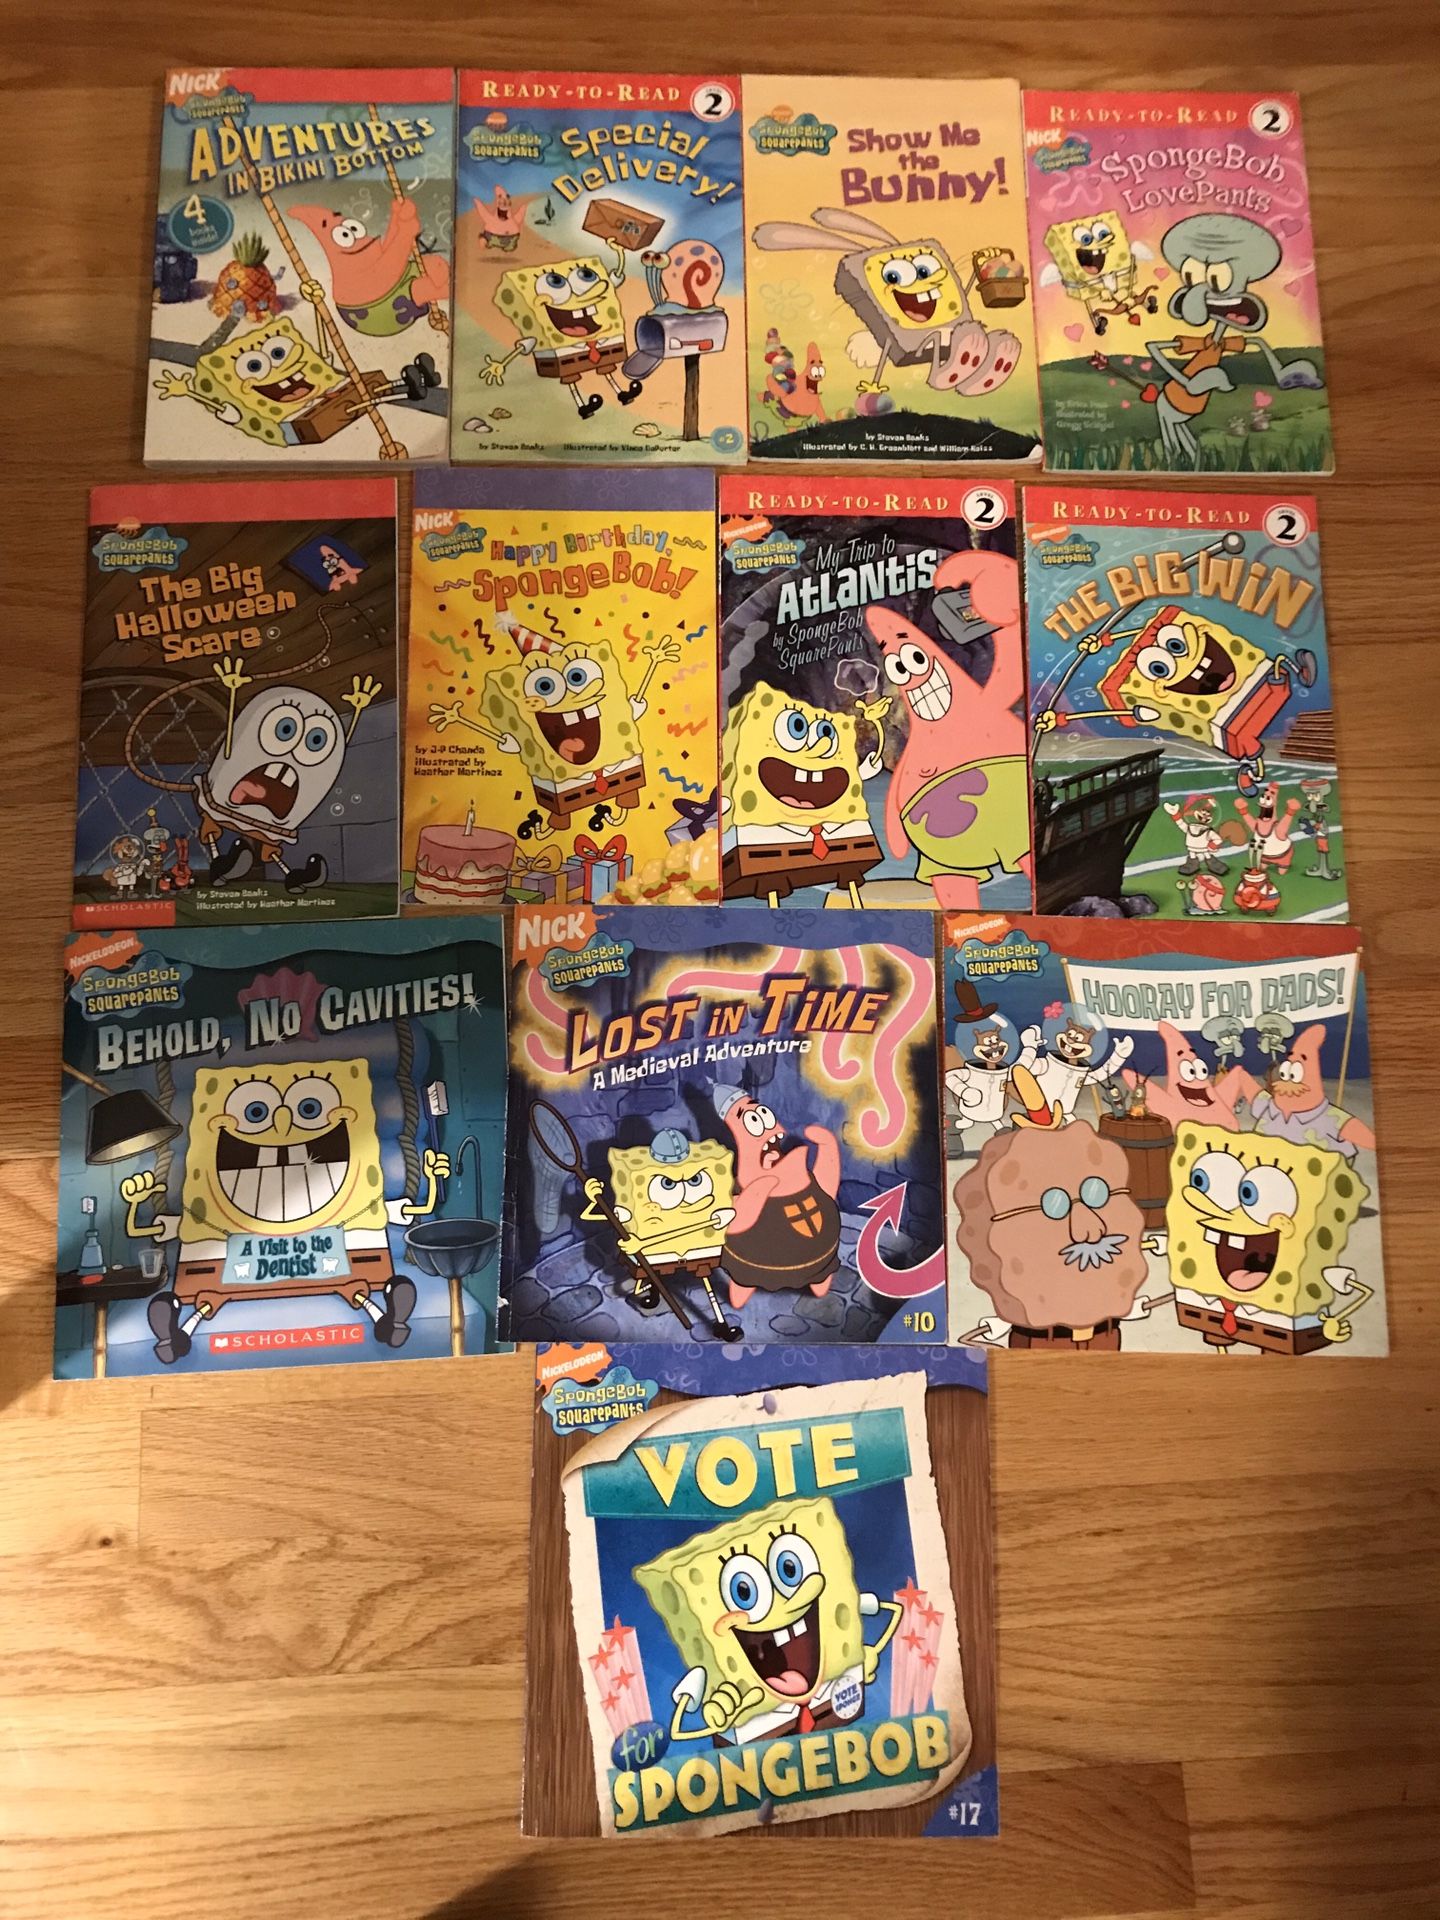 Spongebob book lot. All for $5